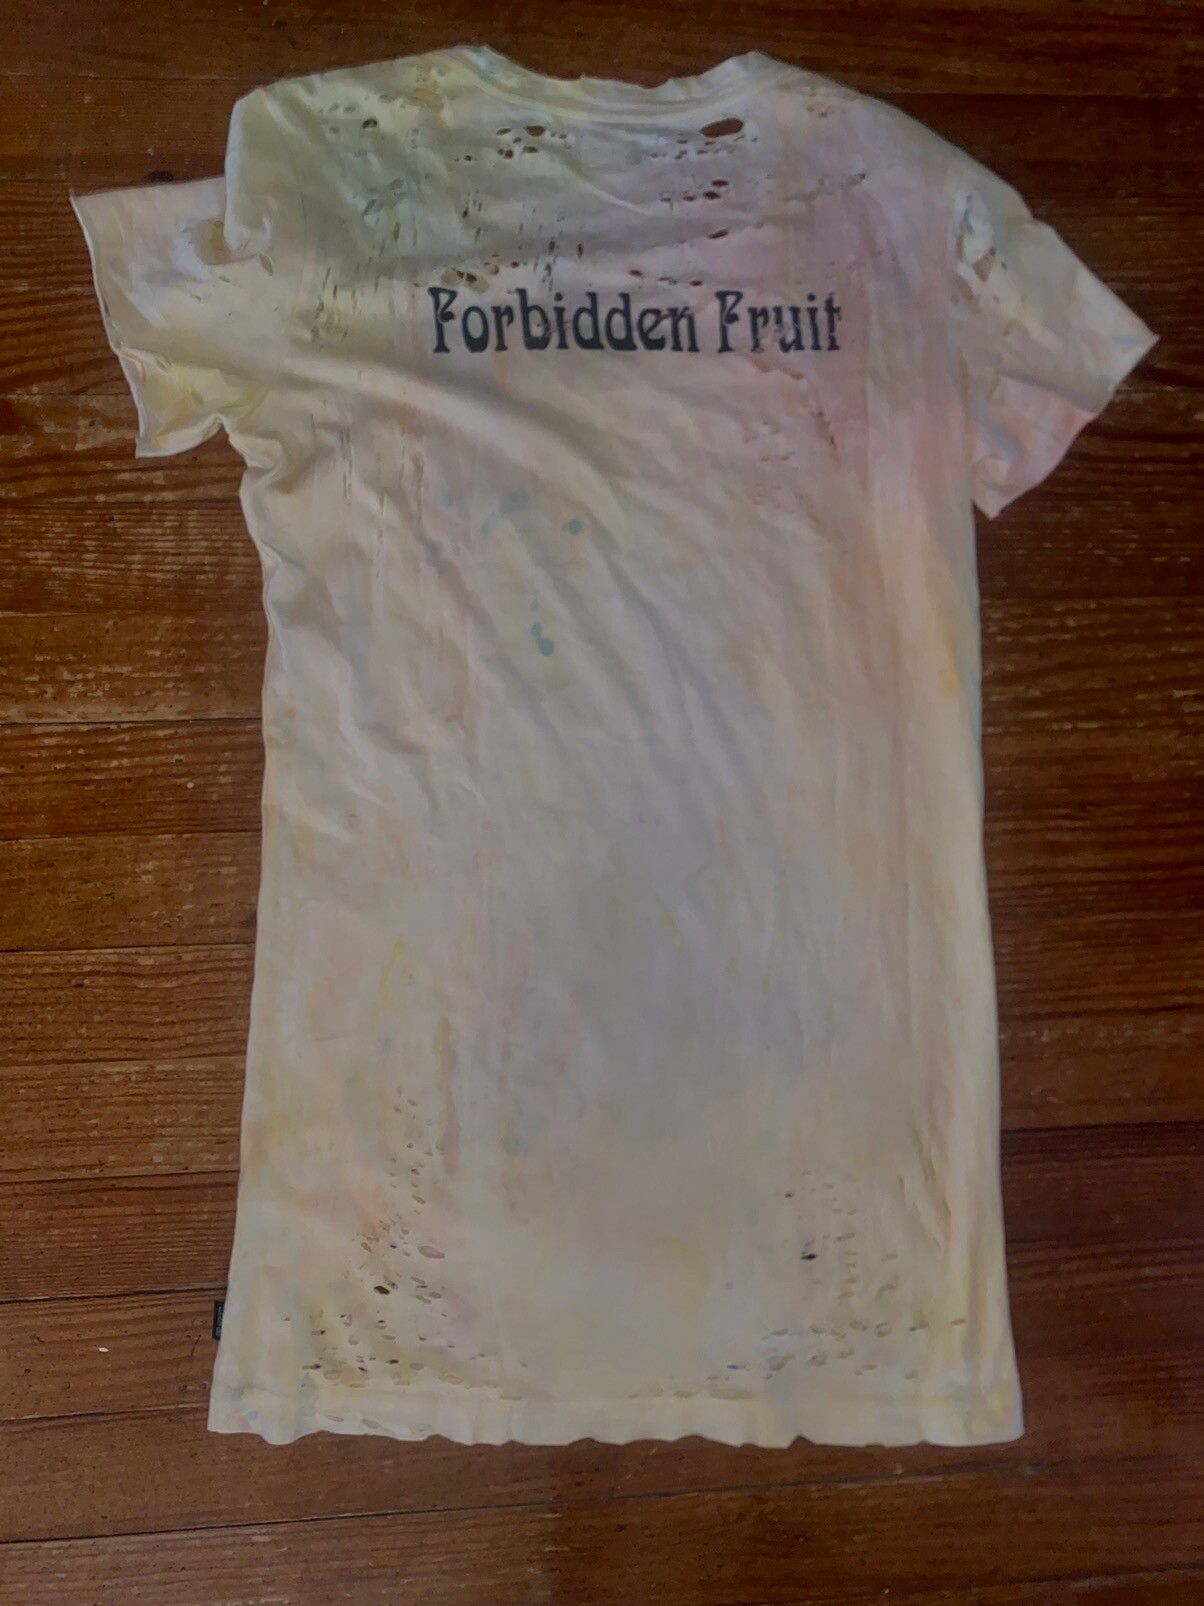 If Six Was Nine LGB “forbidden fruit” thrashed v neck tee shirt ...